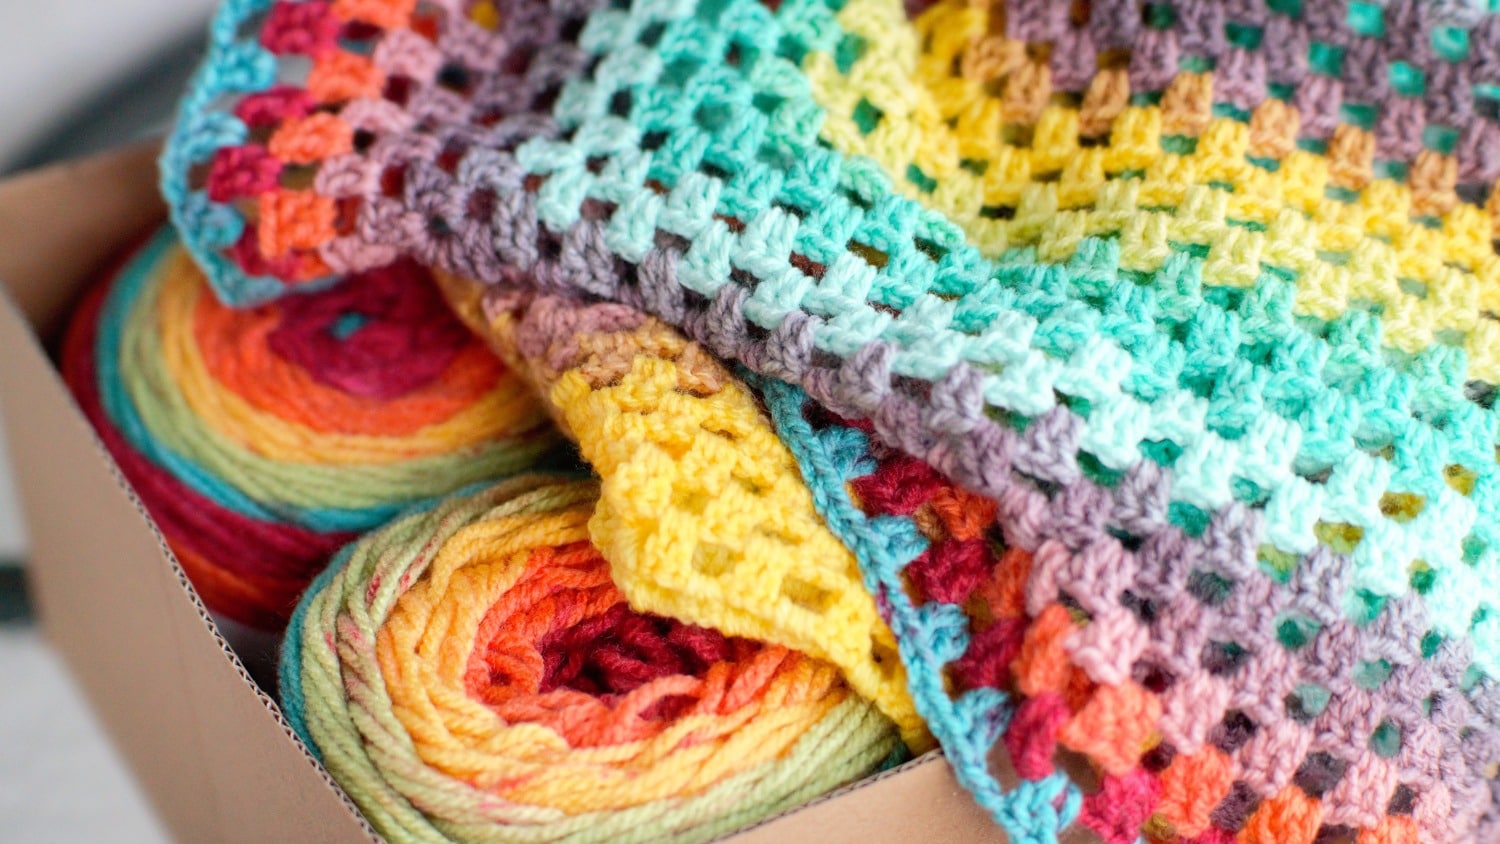 Hand Crochet a Blanket, Online class & kit, Gifts